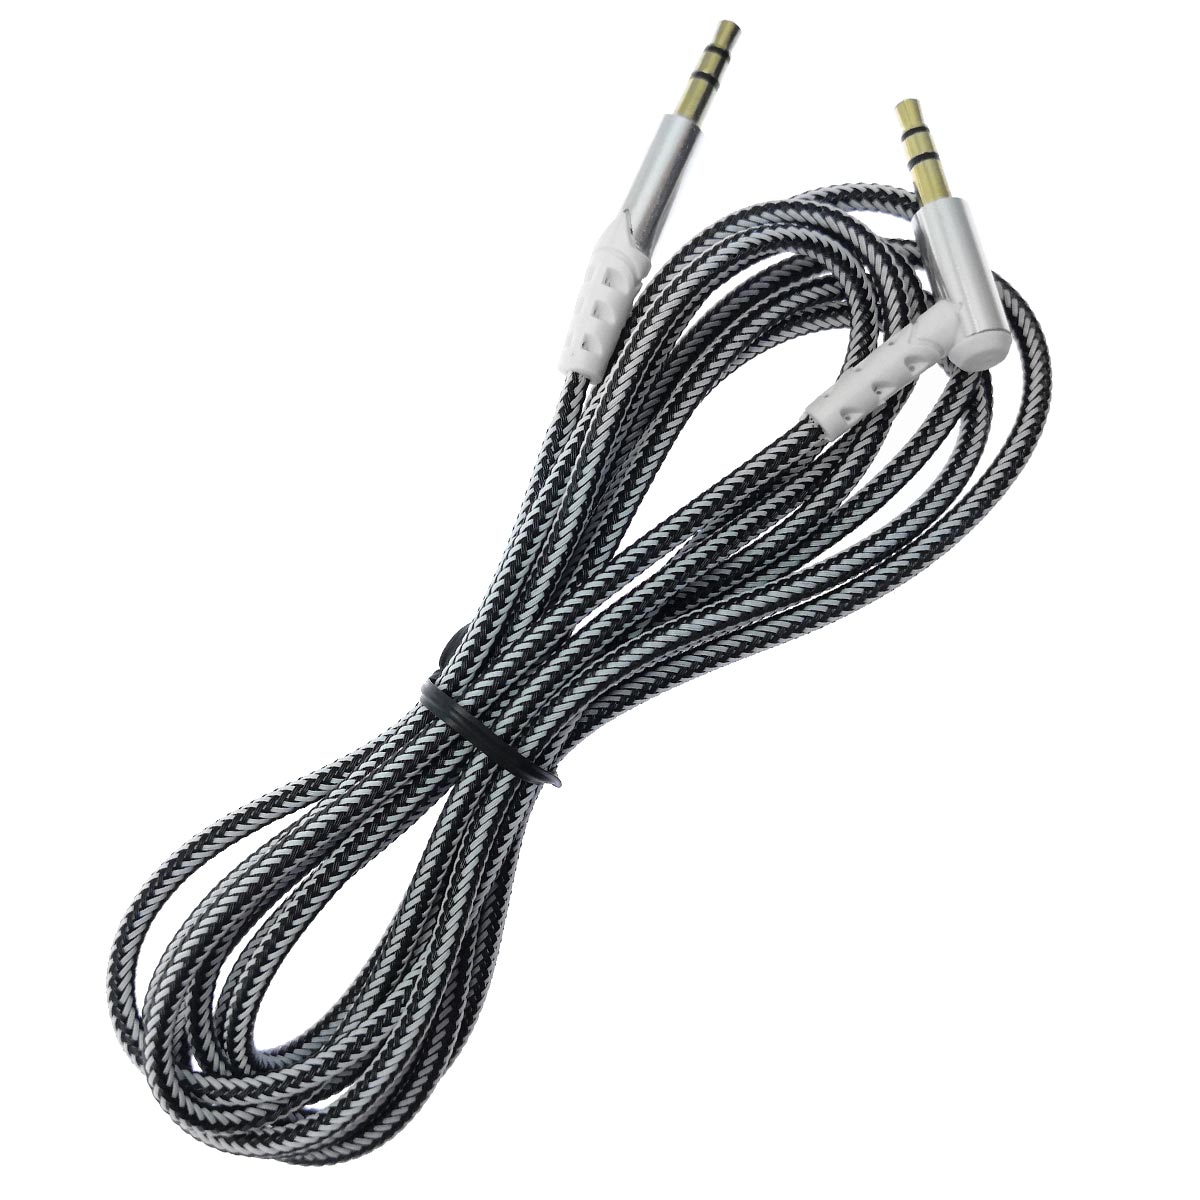 AUX-кабель MRM AX06, угловой, длина 2 метрa, цвет черно белый